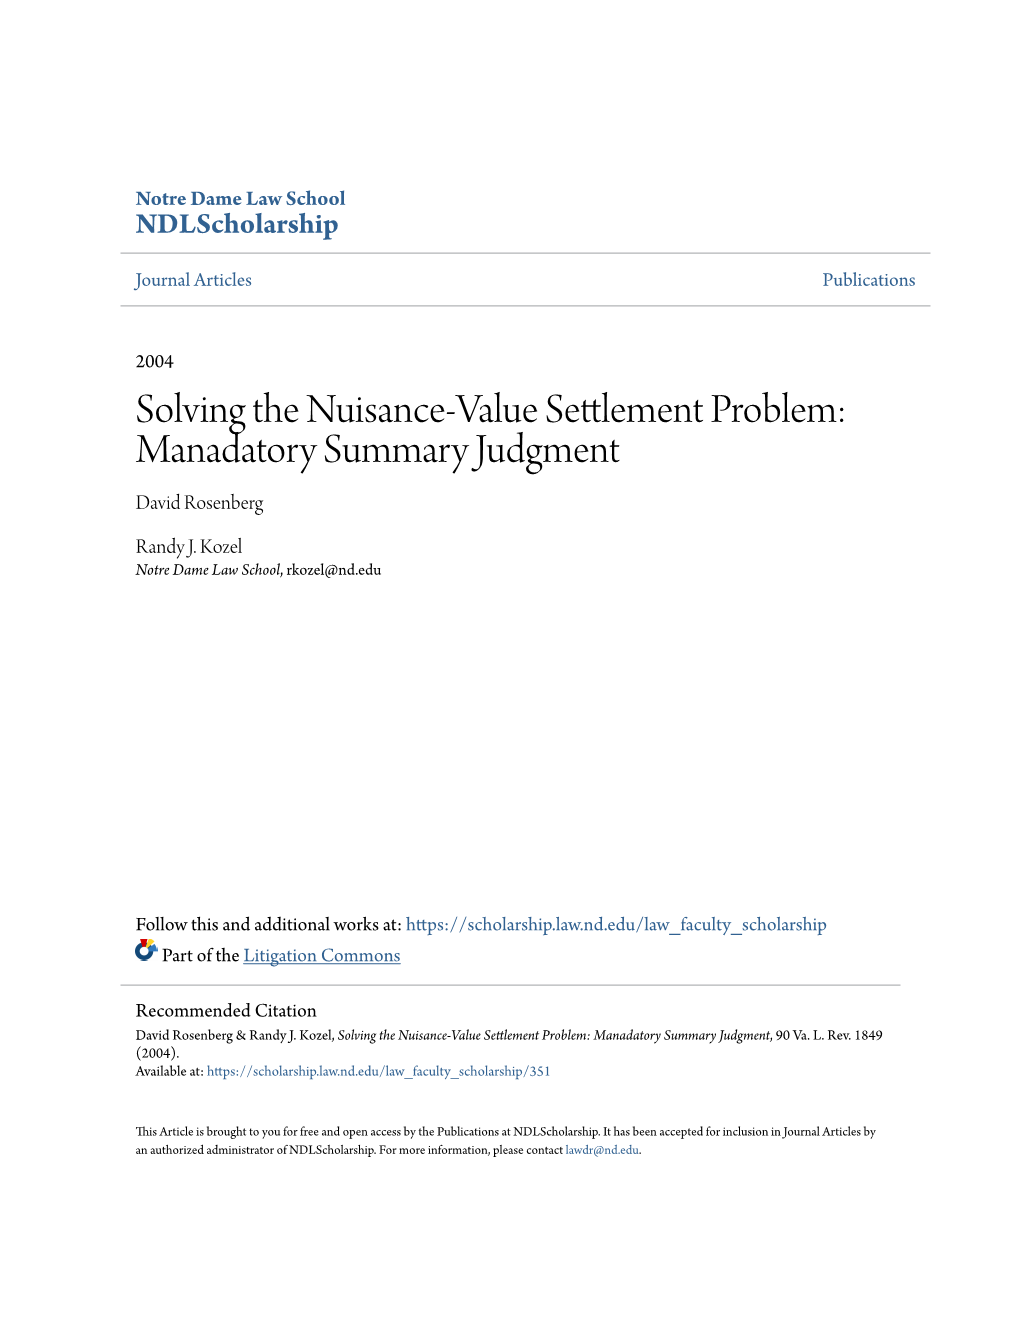 Solving the Nuisance-Value Settlement Problem: Manadatory Summary Judgment David Rosenberg